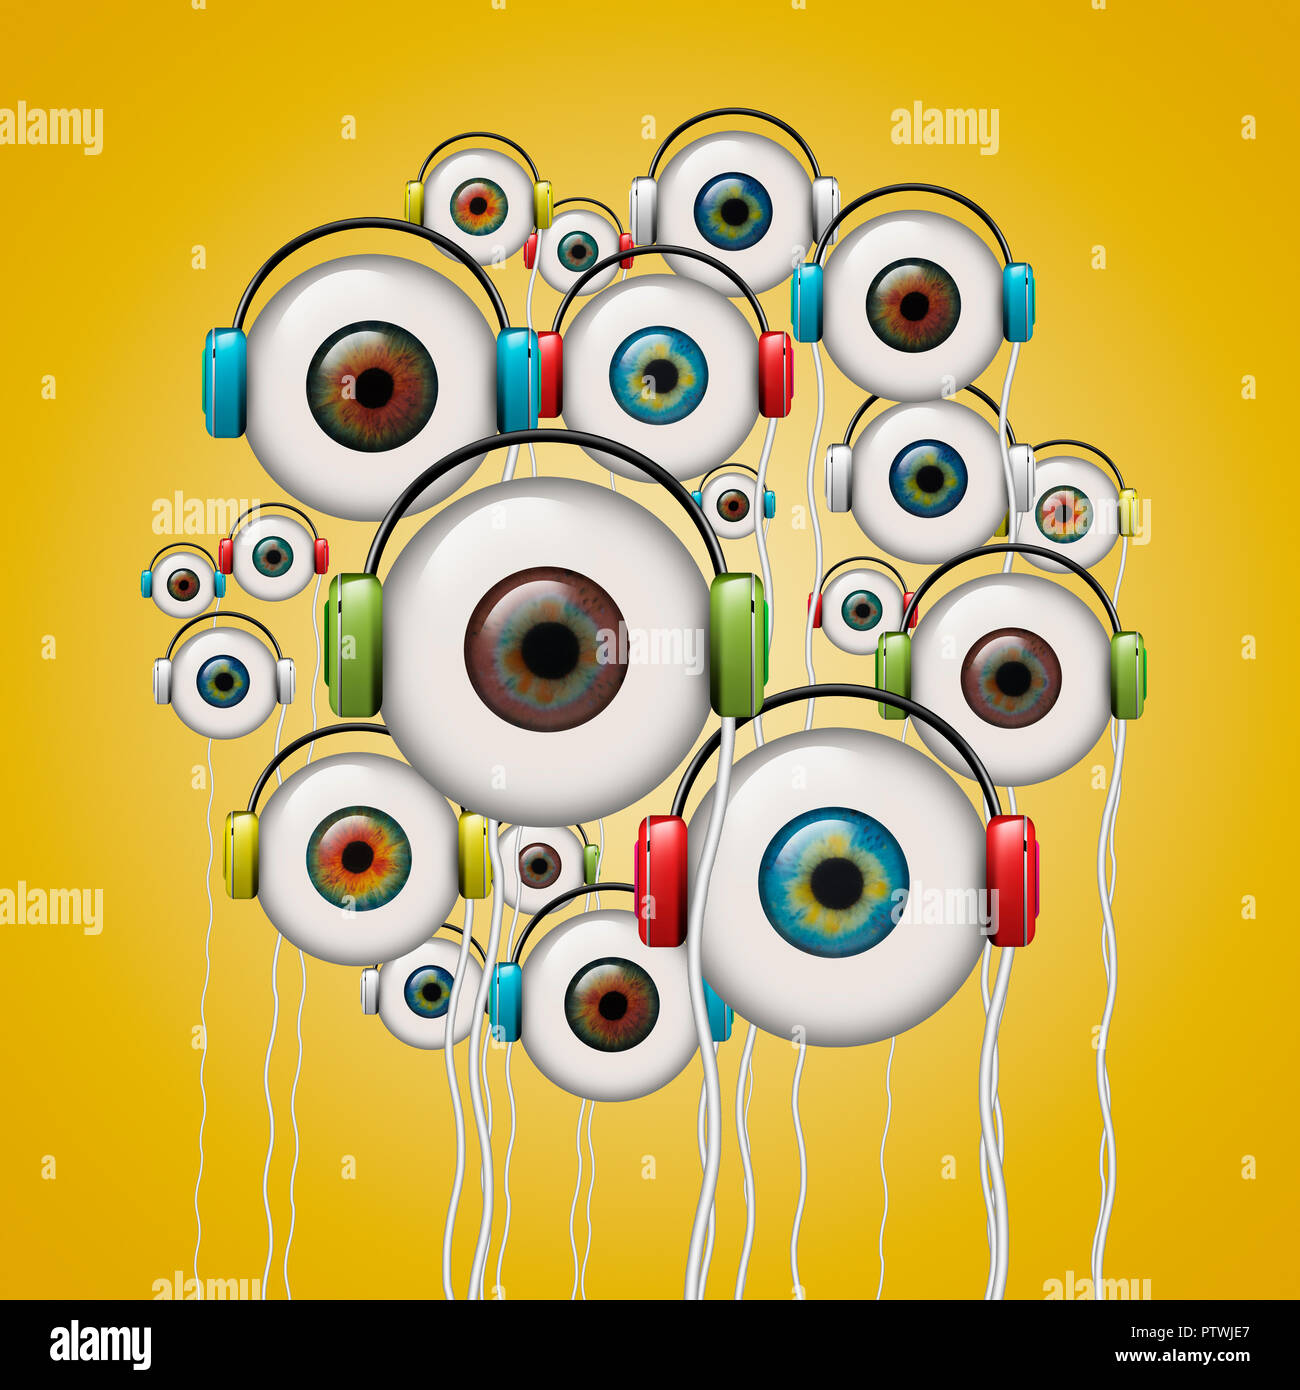 Bulbi oculari con cuffie, immagine digitale Foto Stock